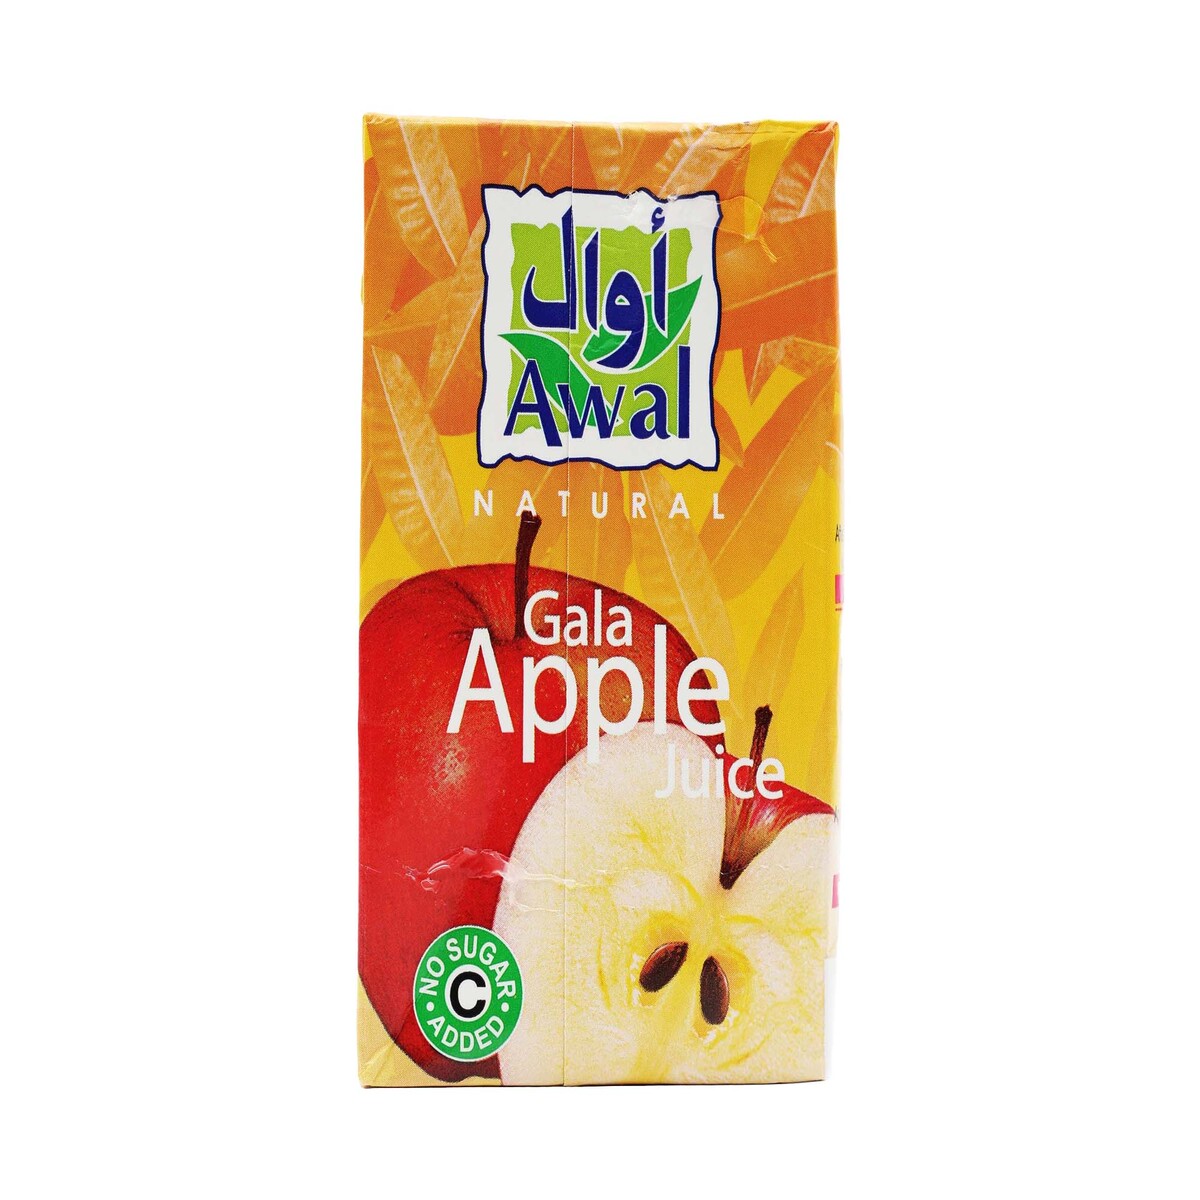 Awal Gala Apple Juice 18 x 200ml